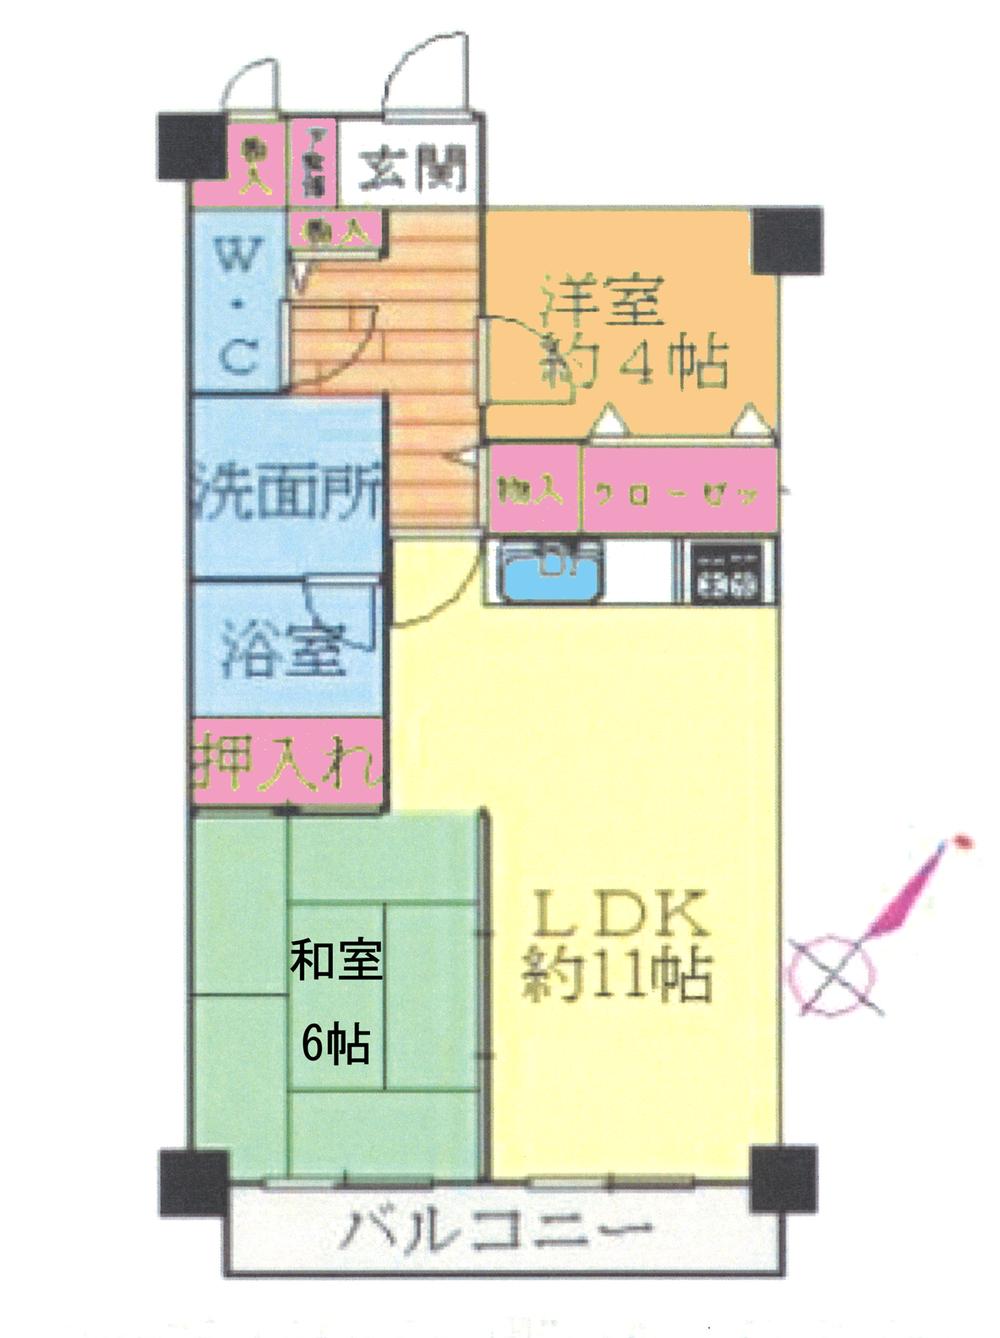 Floor plan. 2LDK, Price 9.2 million yen, Occupied area 47.38 sq m floor plan